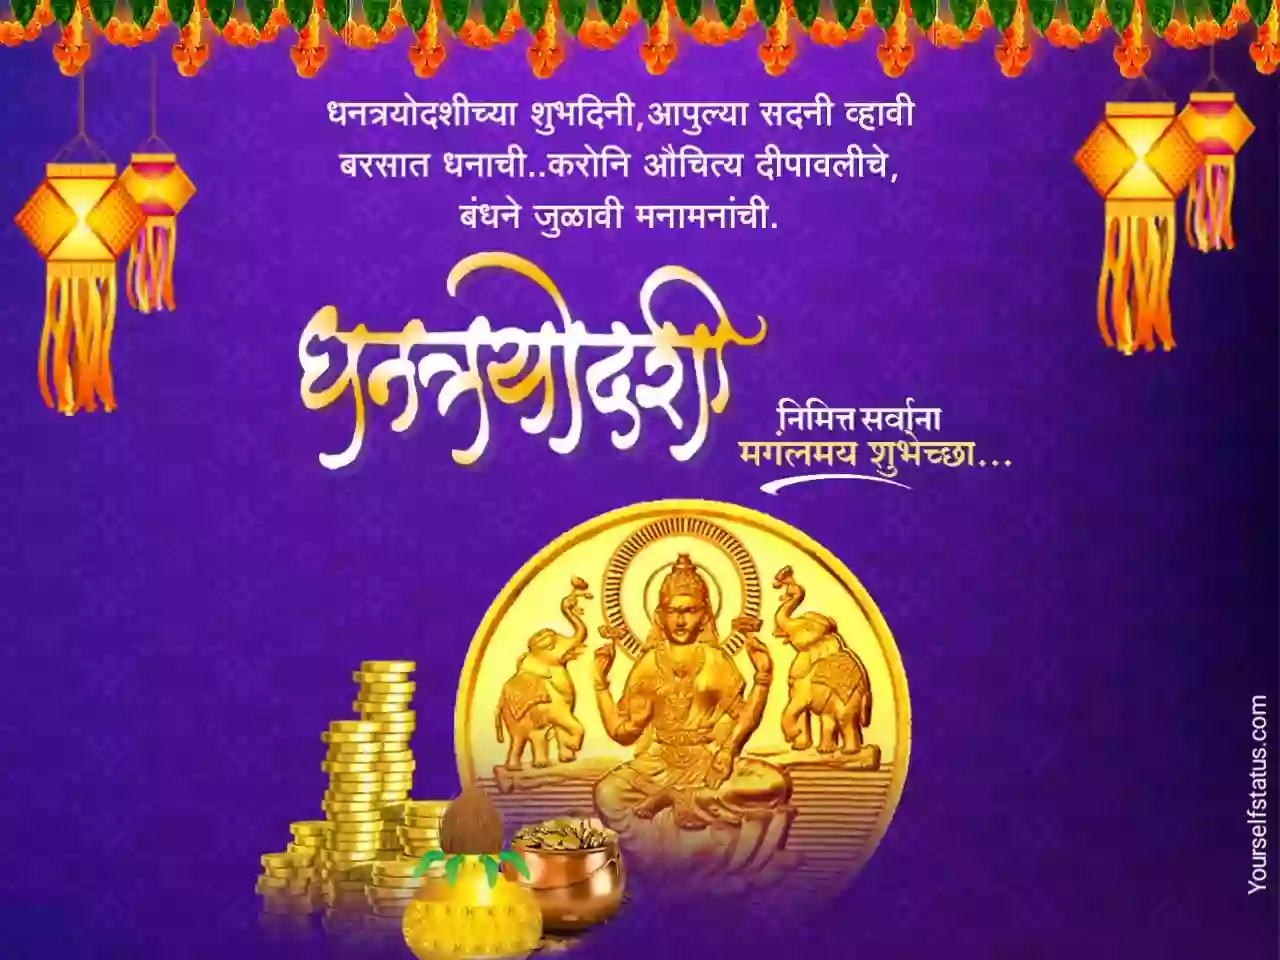 Dhantrayodashi wishes in marathi